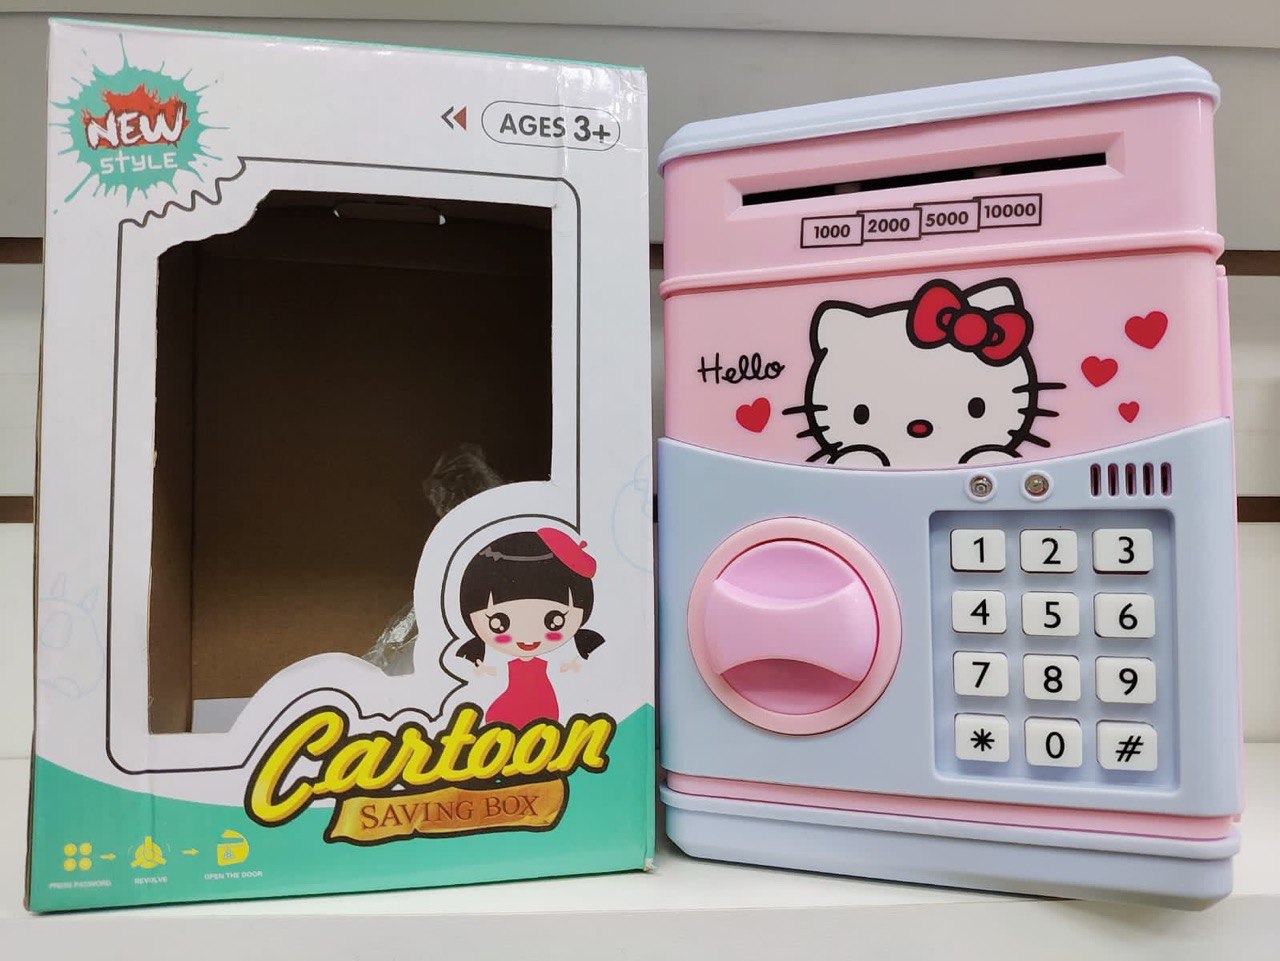 Детская копилка-сейф с кодовым замком Hello Kitty Cartoon Saving Box оптом - Фото №2